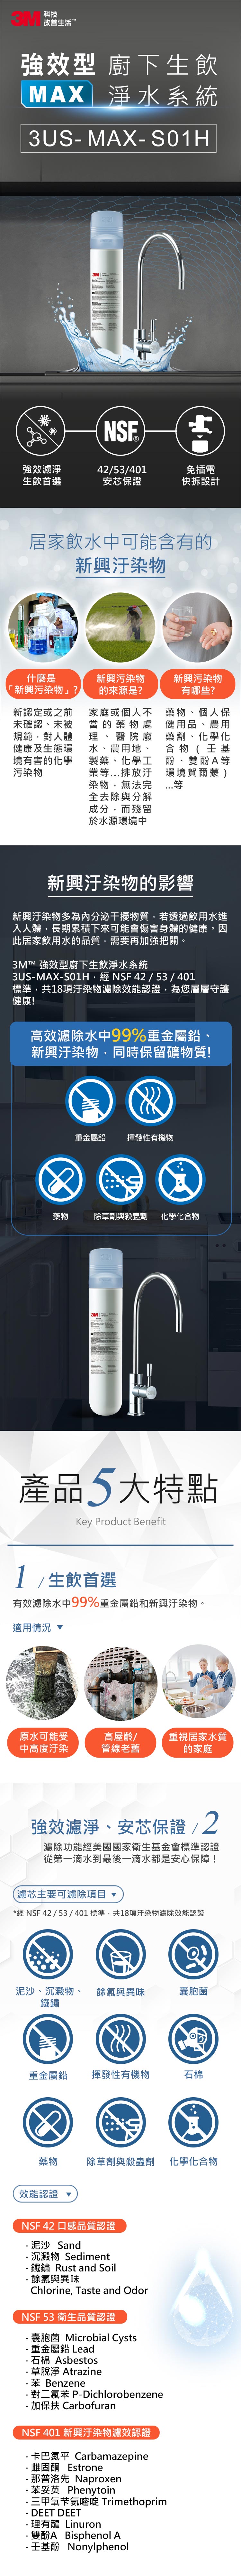 3M 3US-MAX-S01H 強效型櫥下生飲淨水系統產品說明